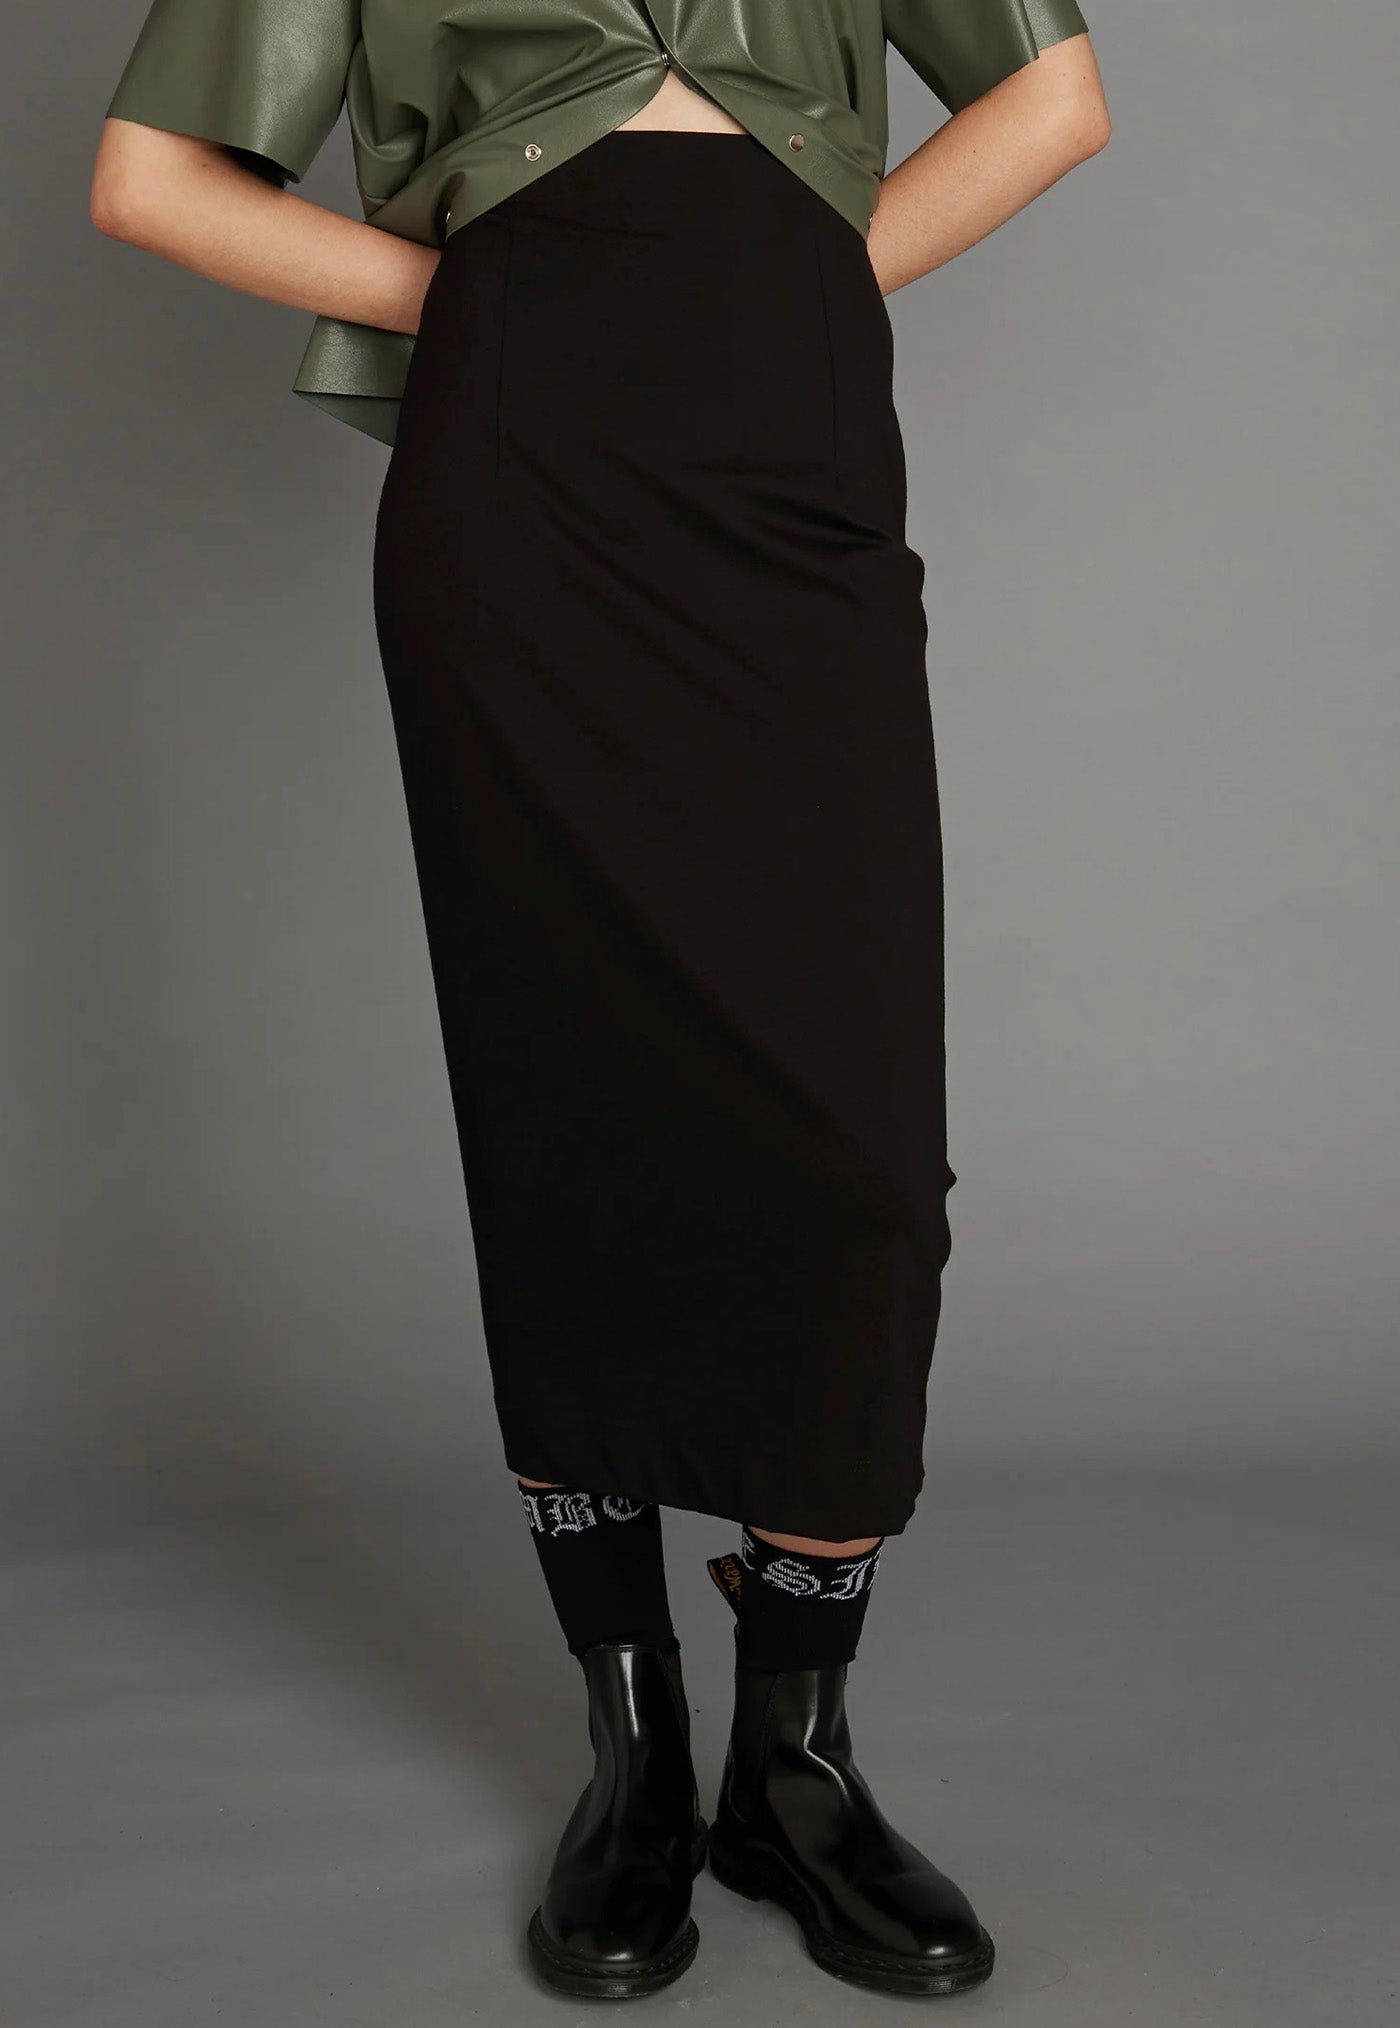 Svelte Skirt - Blacksmith sold by Angel Divine